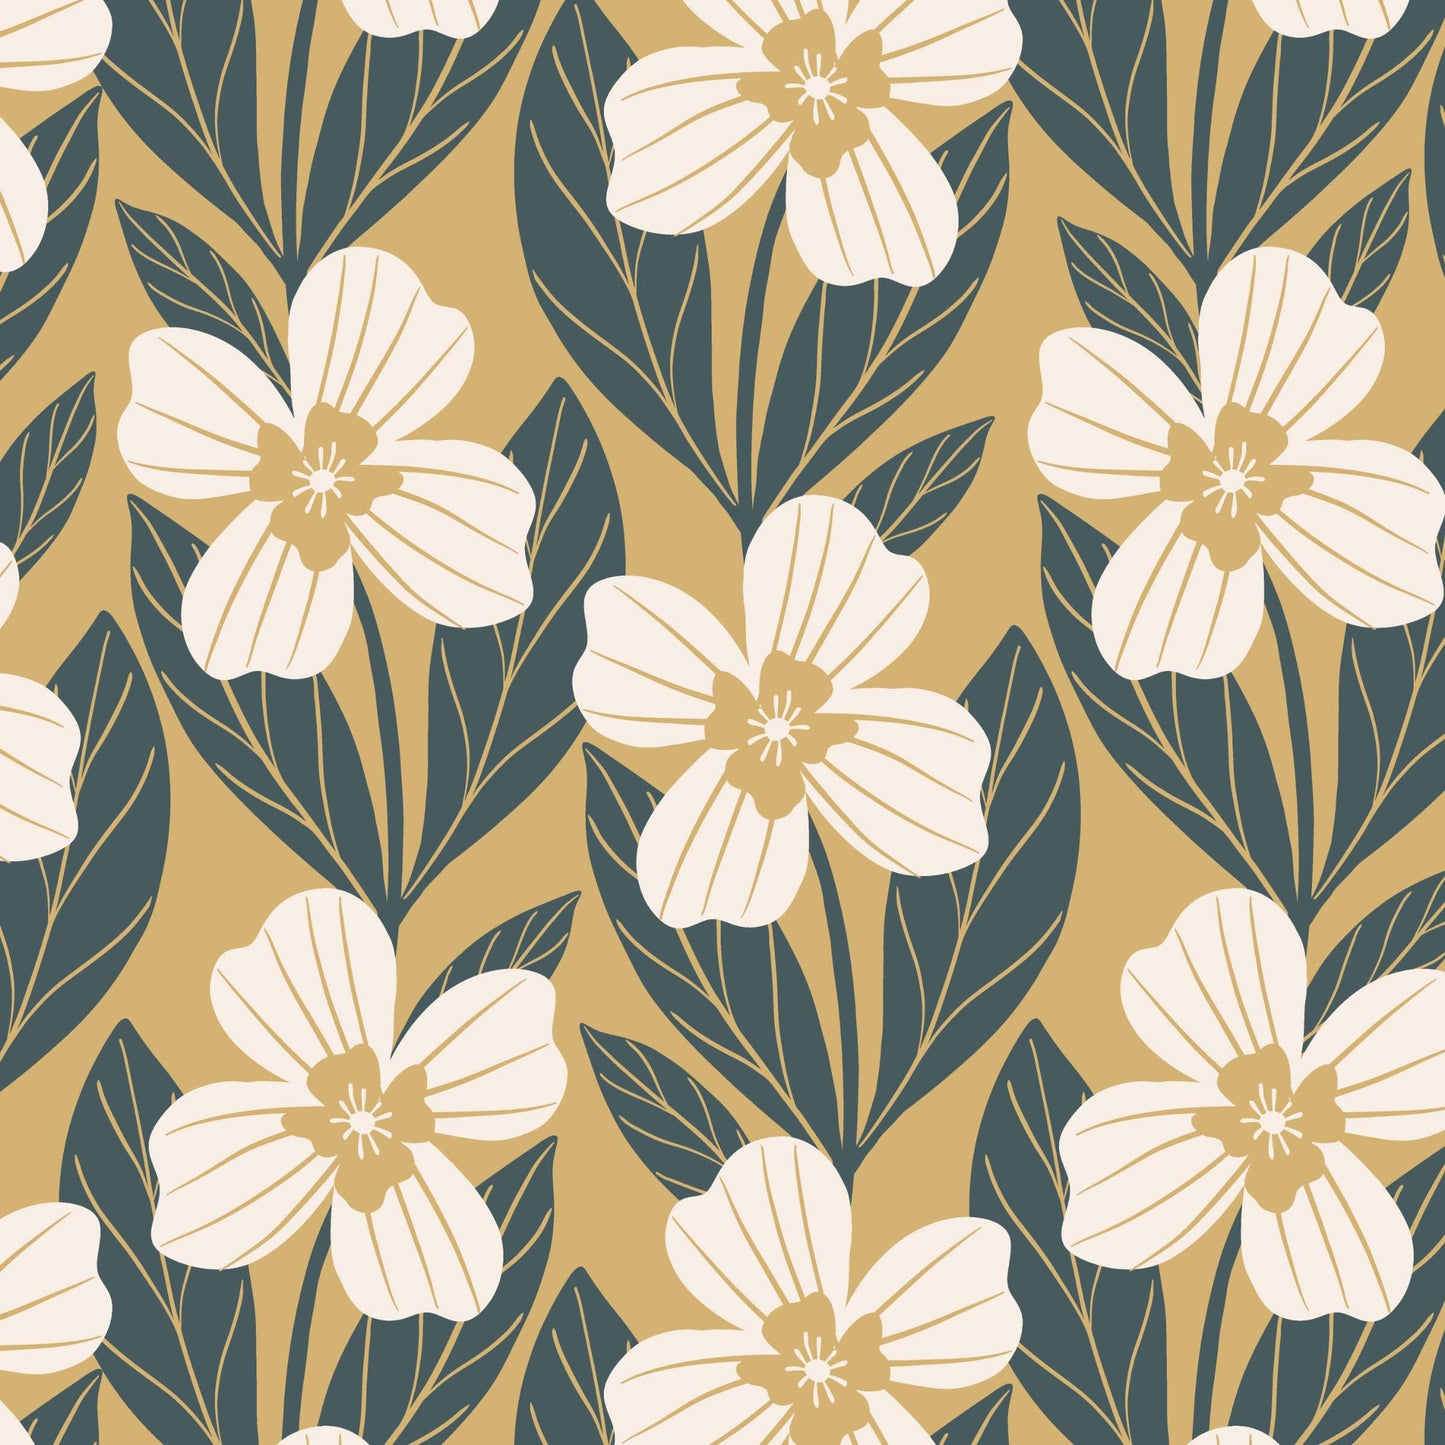 Garden Poppies Wallpaper - Cream and Ochre